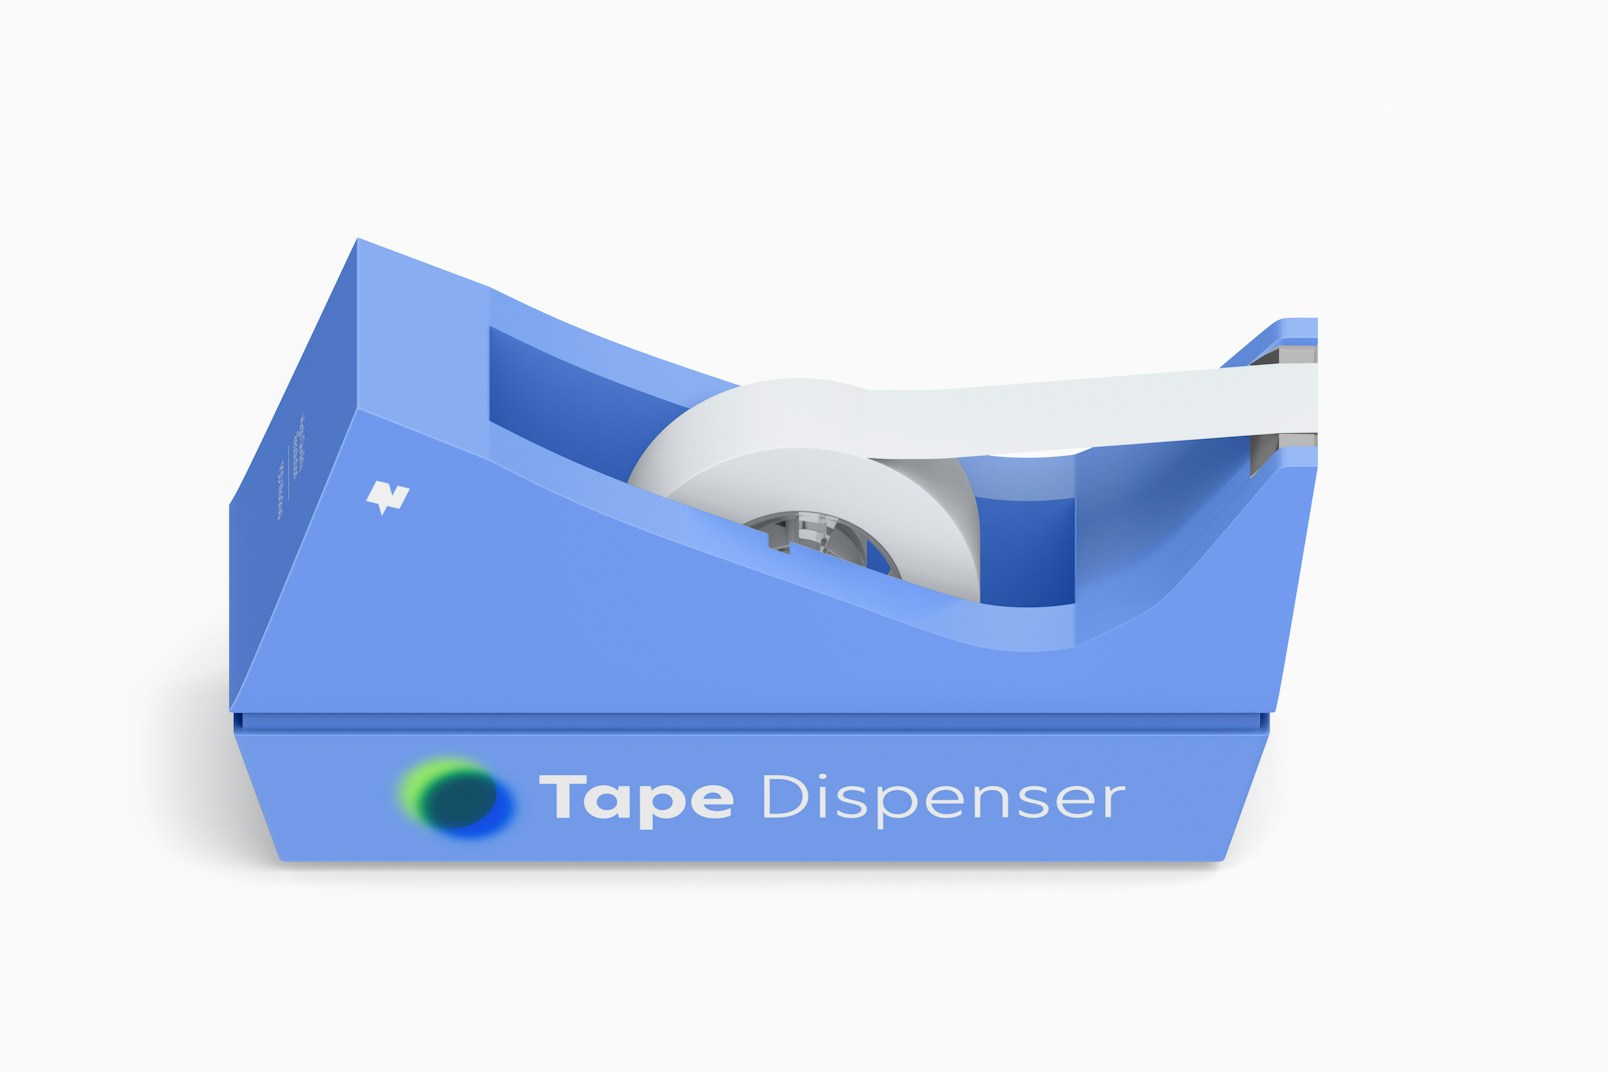 Tape Dispenser Mockup, Isometric View